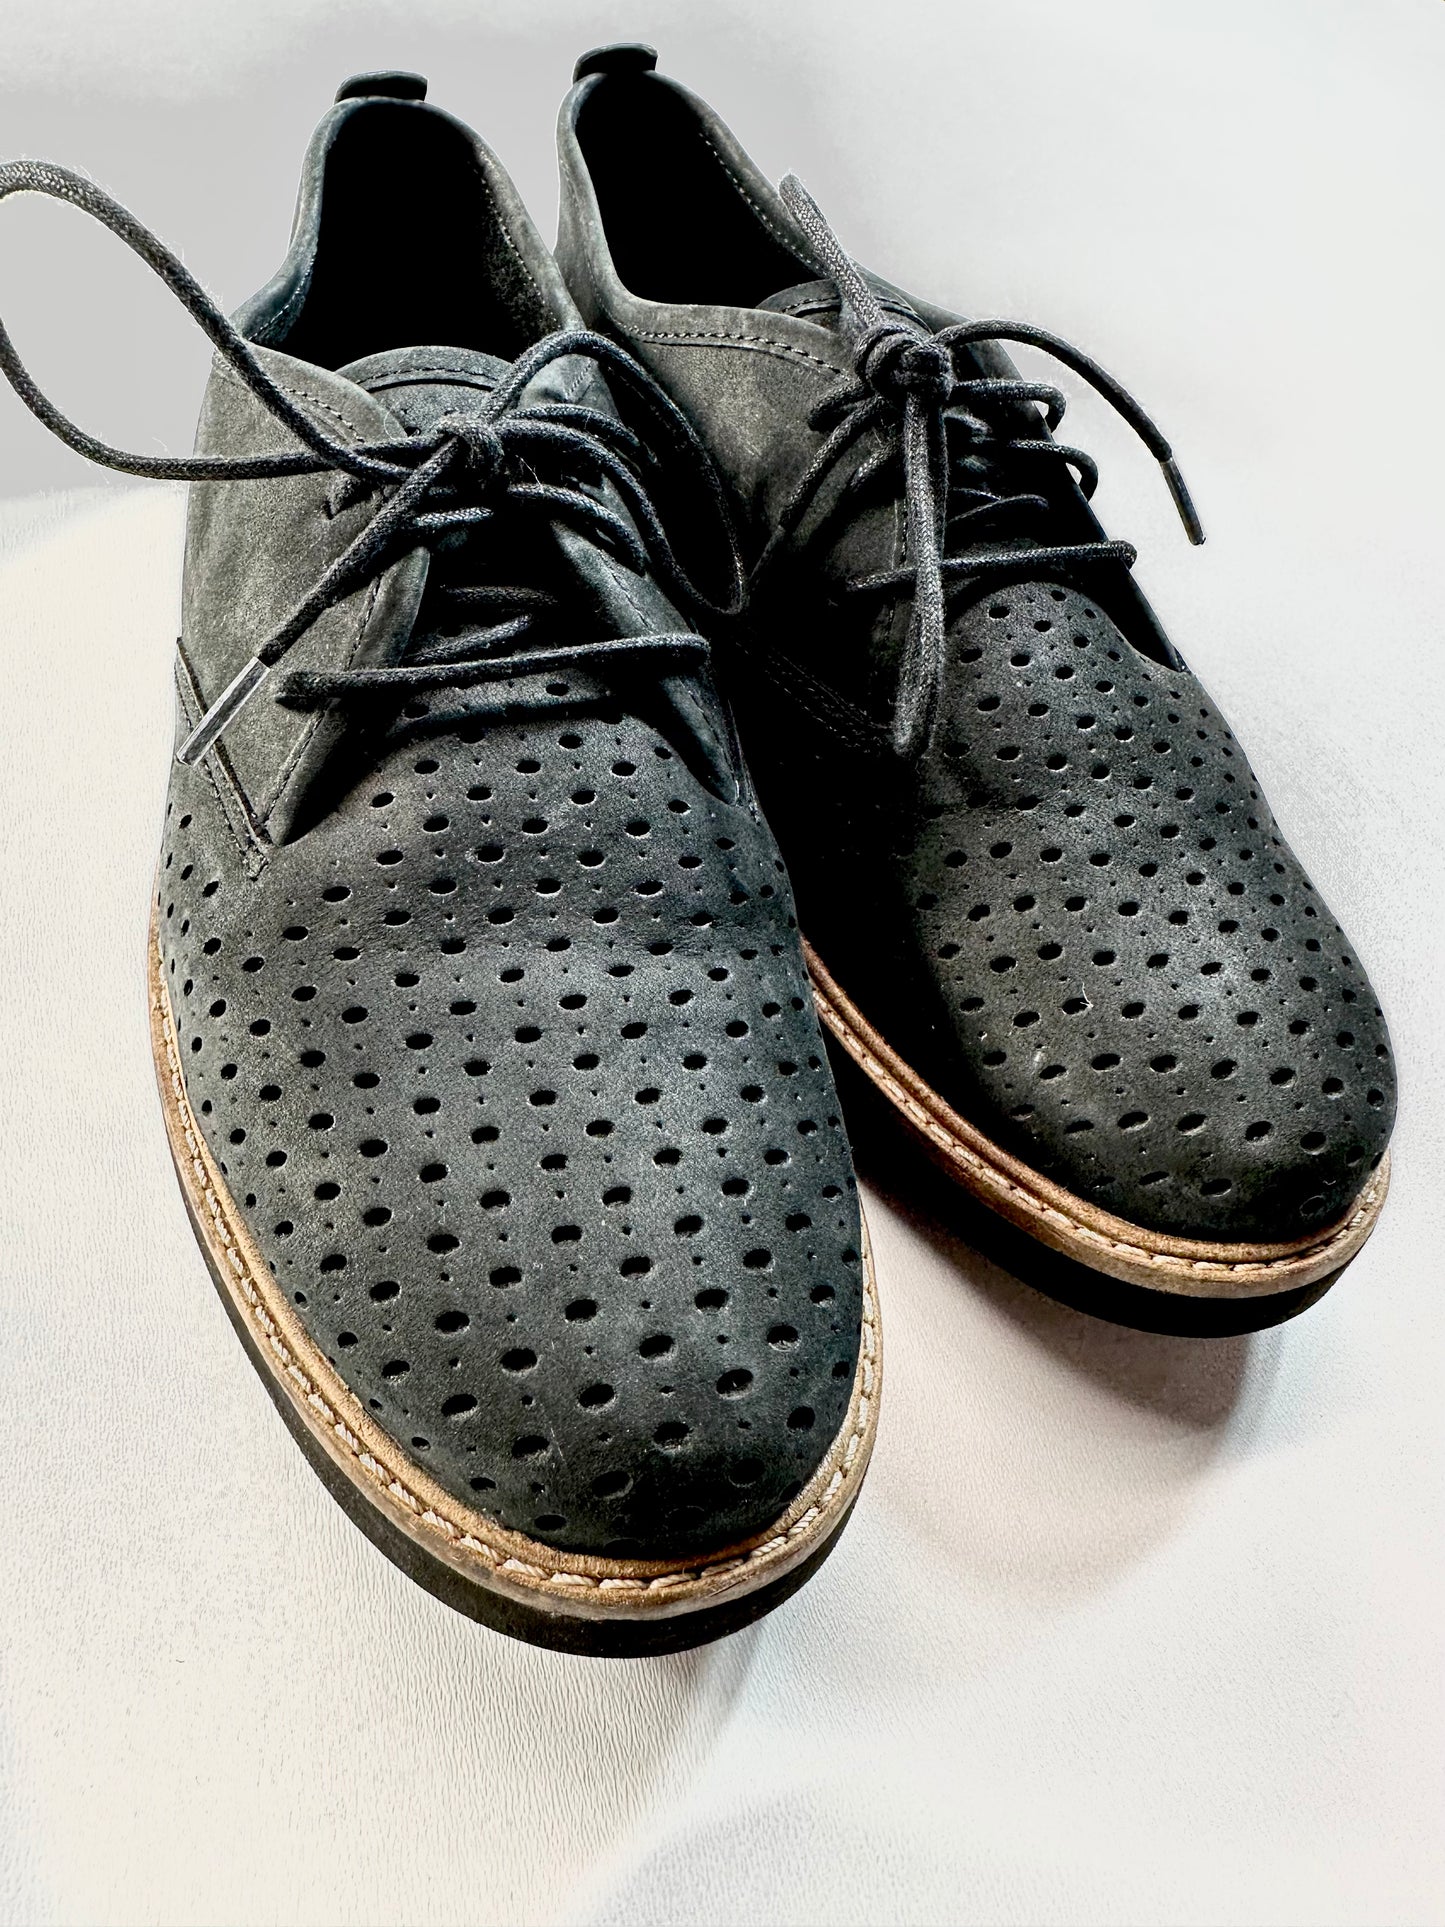 Shoe Clarkes Black